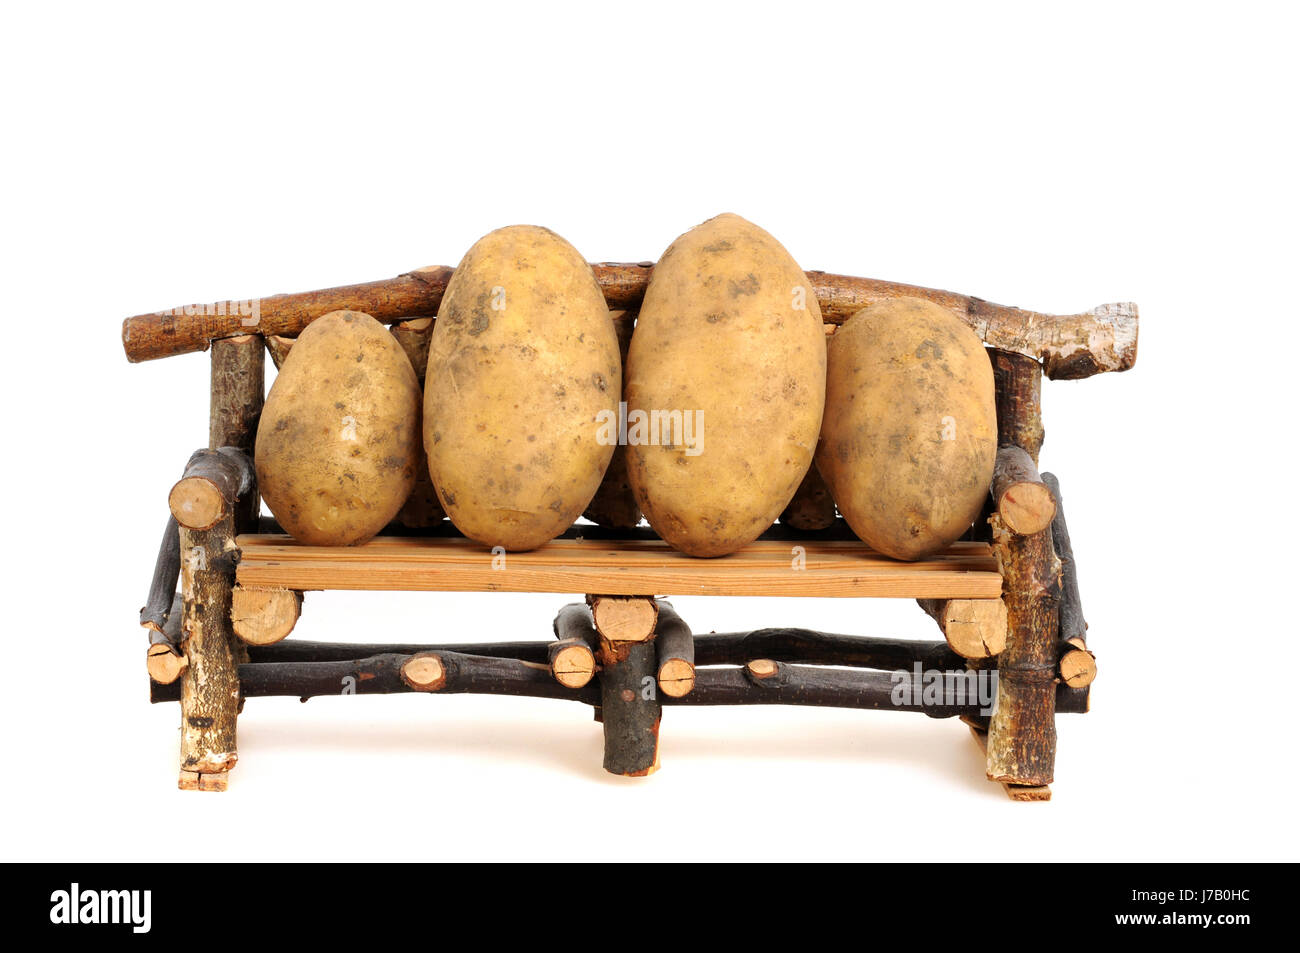 quiri zhang couch potato